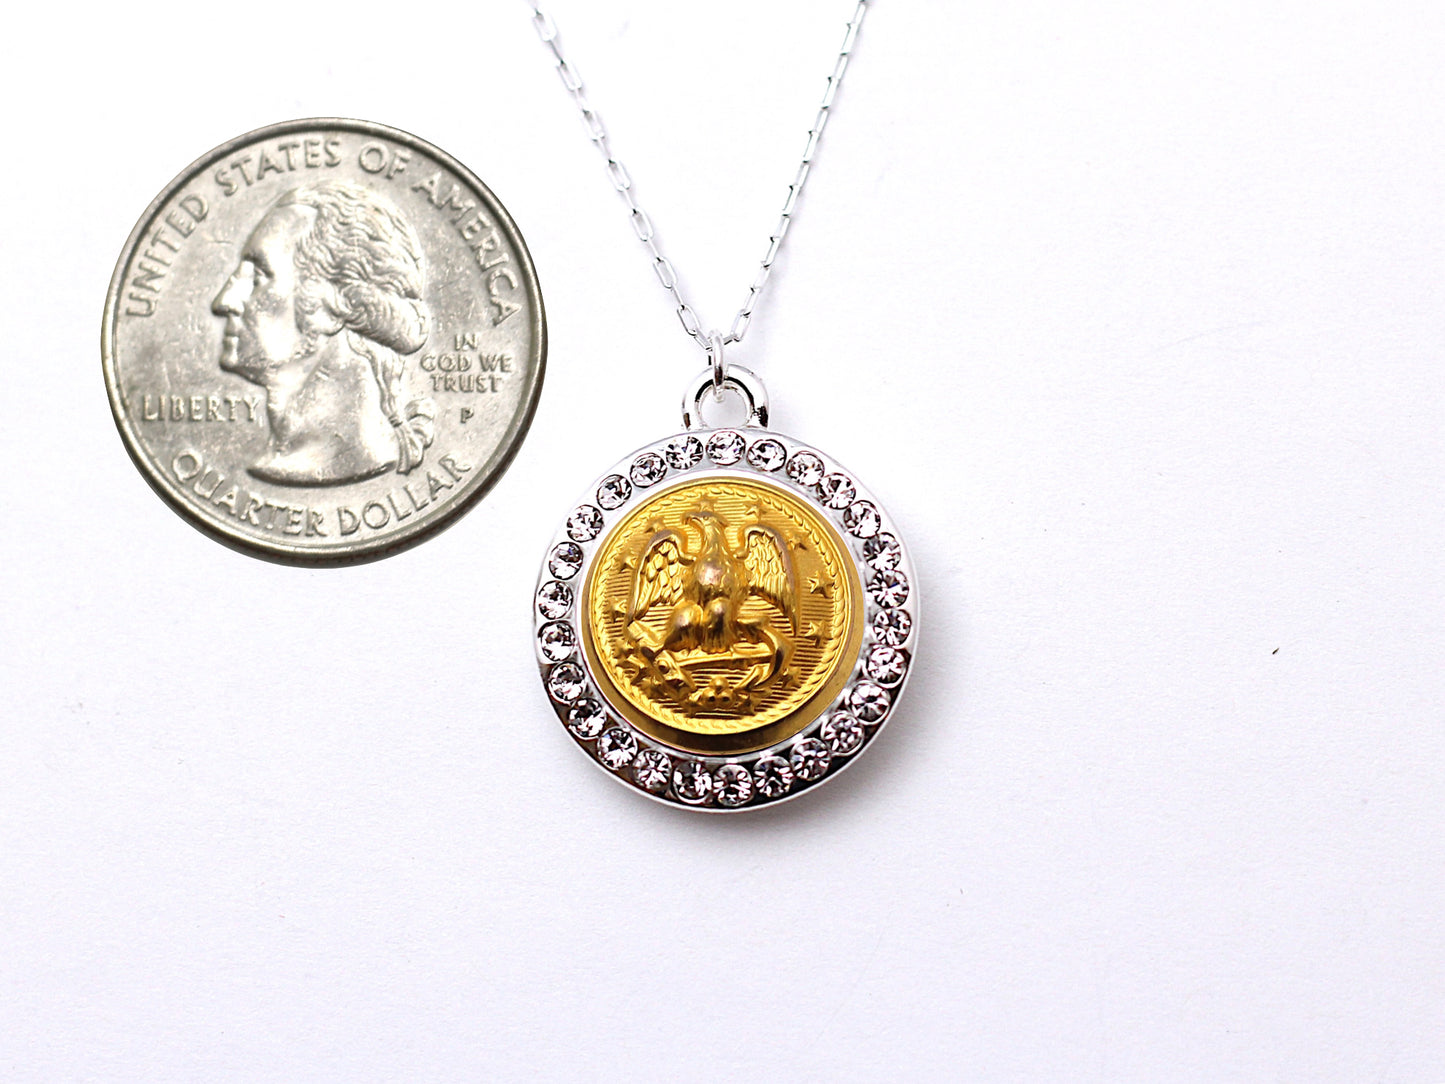 Navy Button Necklace - Small Rhinestone Silver Pendant